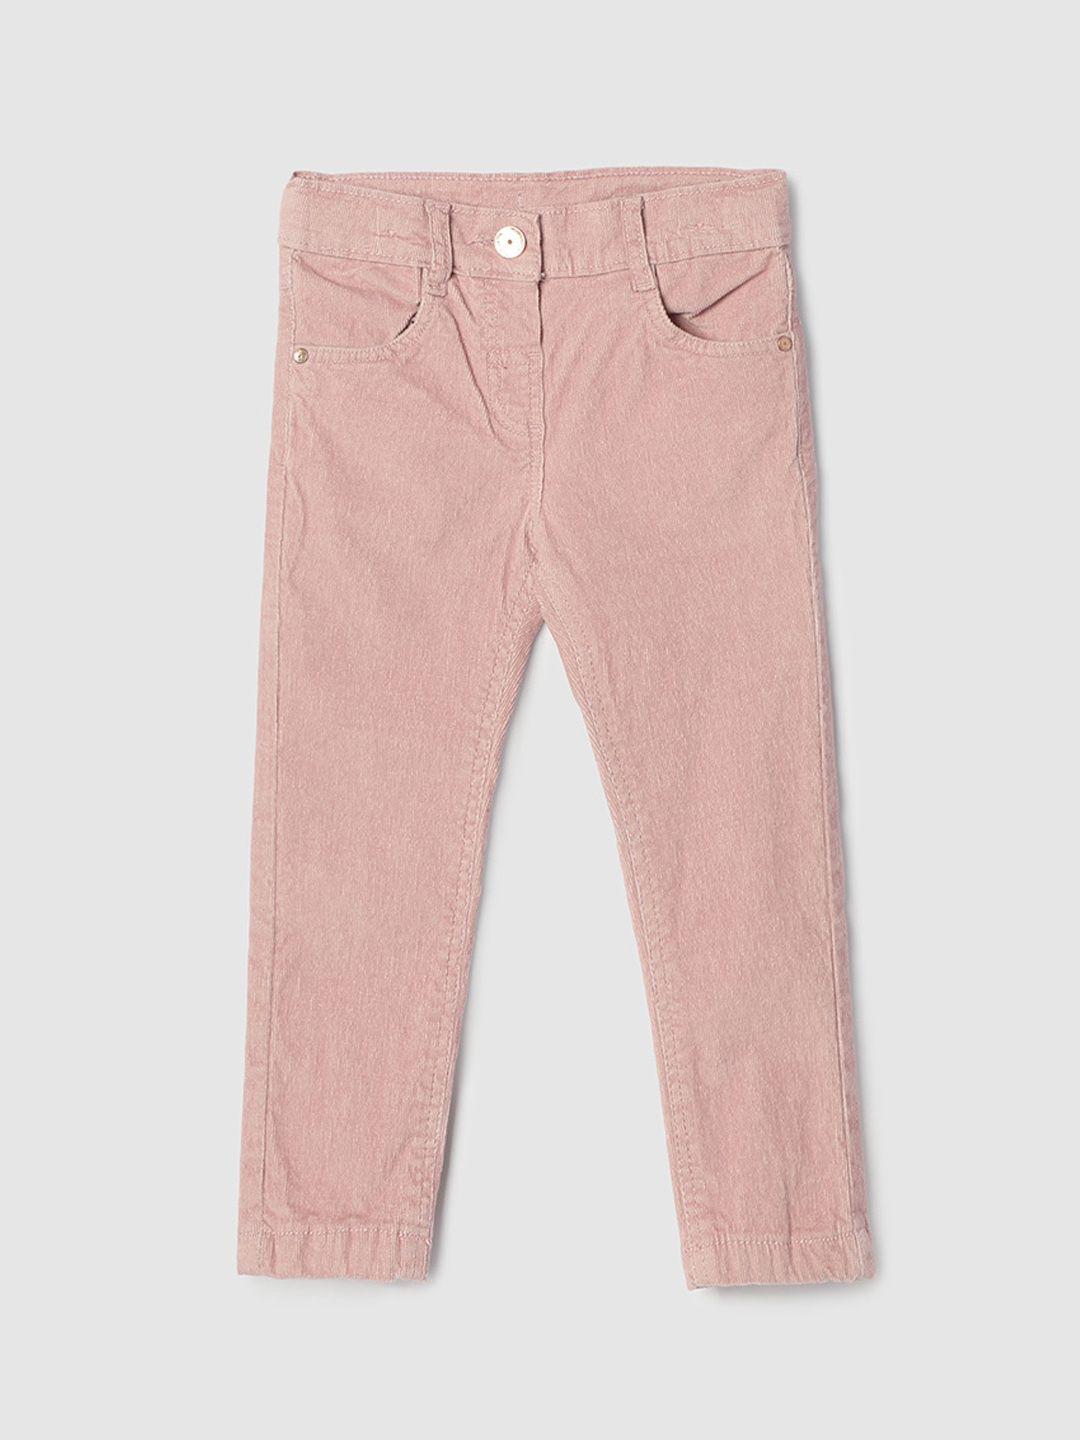 max boys plain corduroy cotton lycra regular trousers